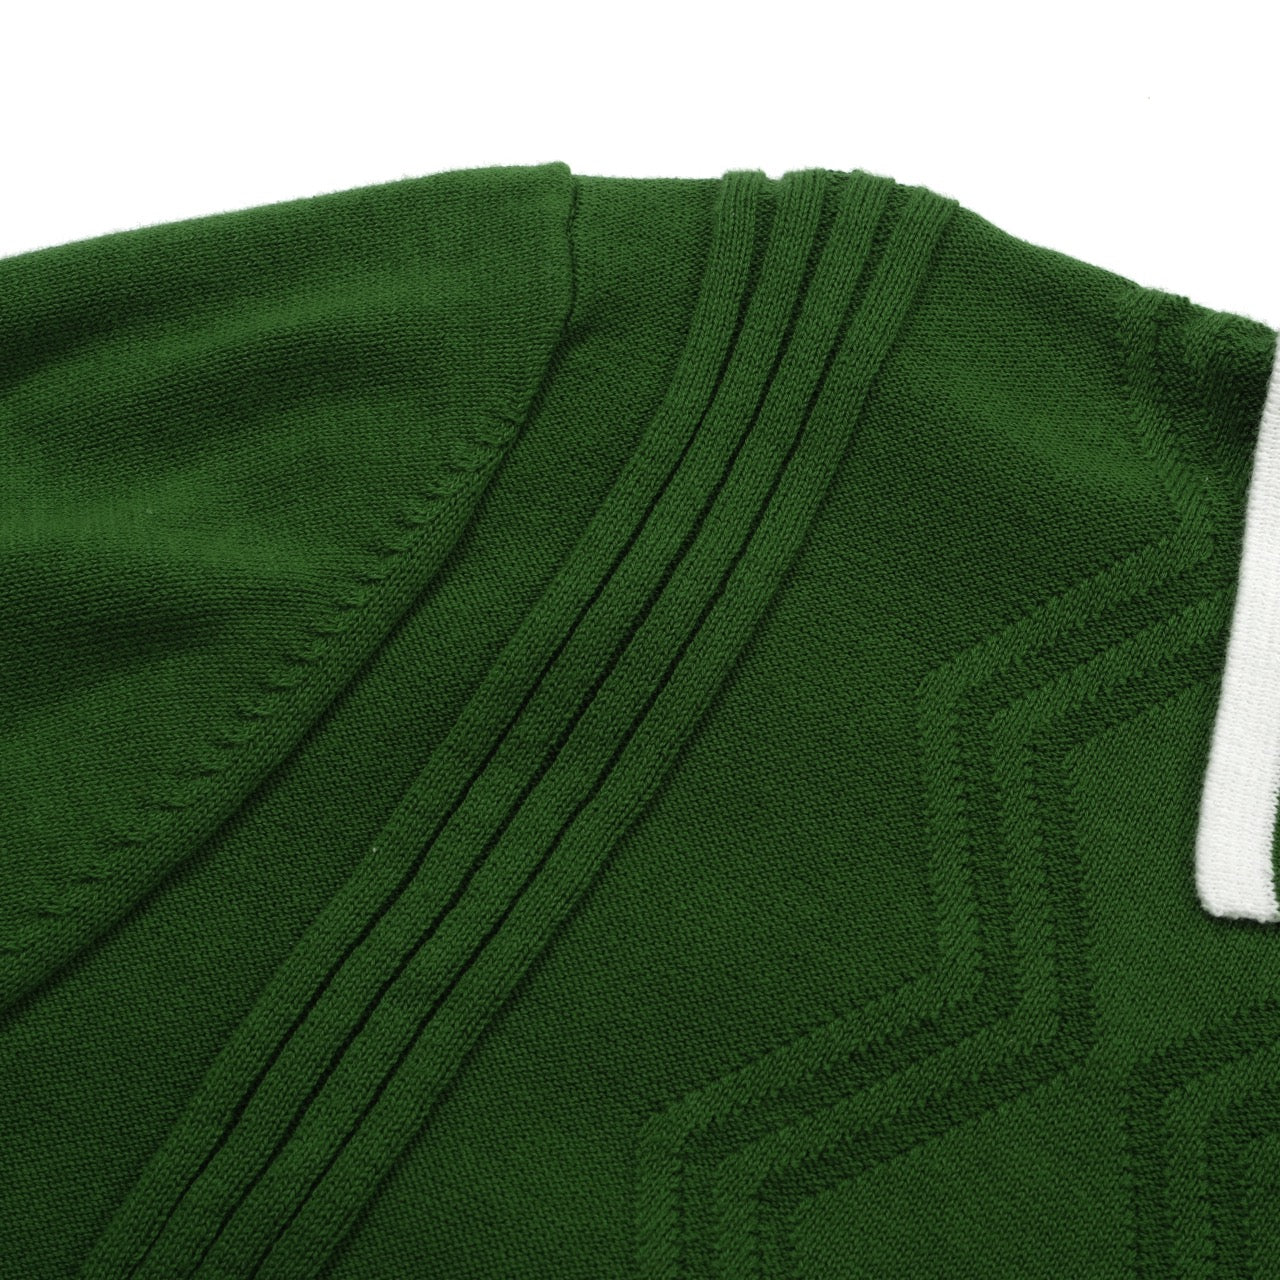 OXKNIT Men Vintage Clothing 1960s Mod Style Casual Dark Green Knit Retro Polo